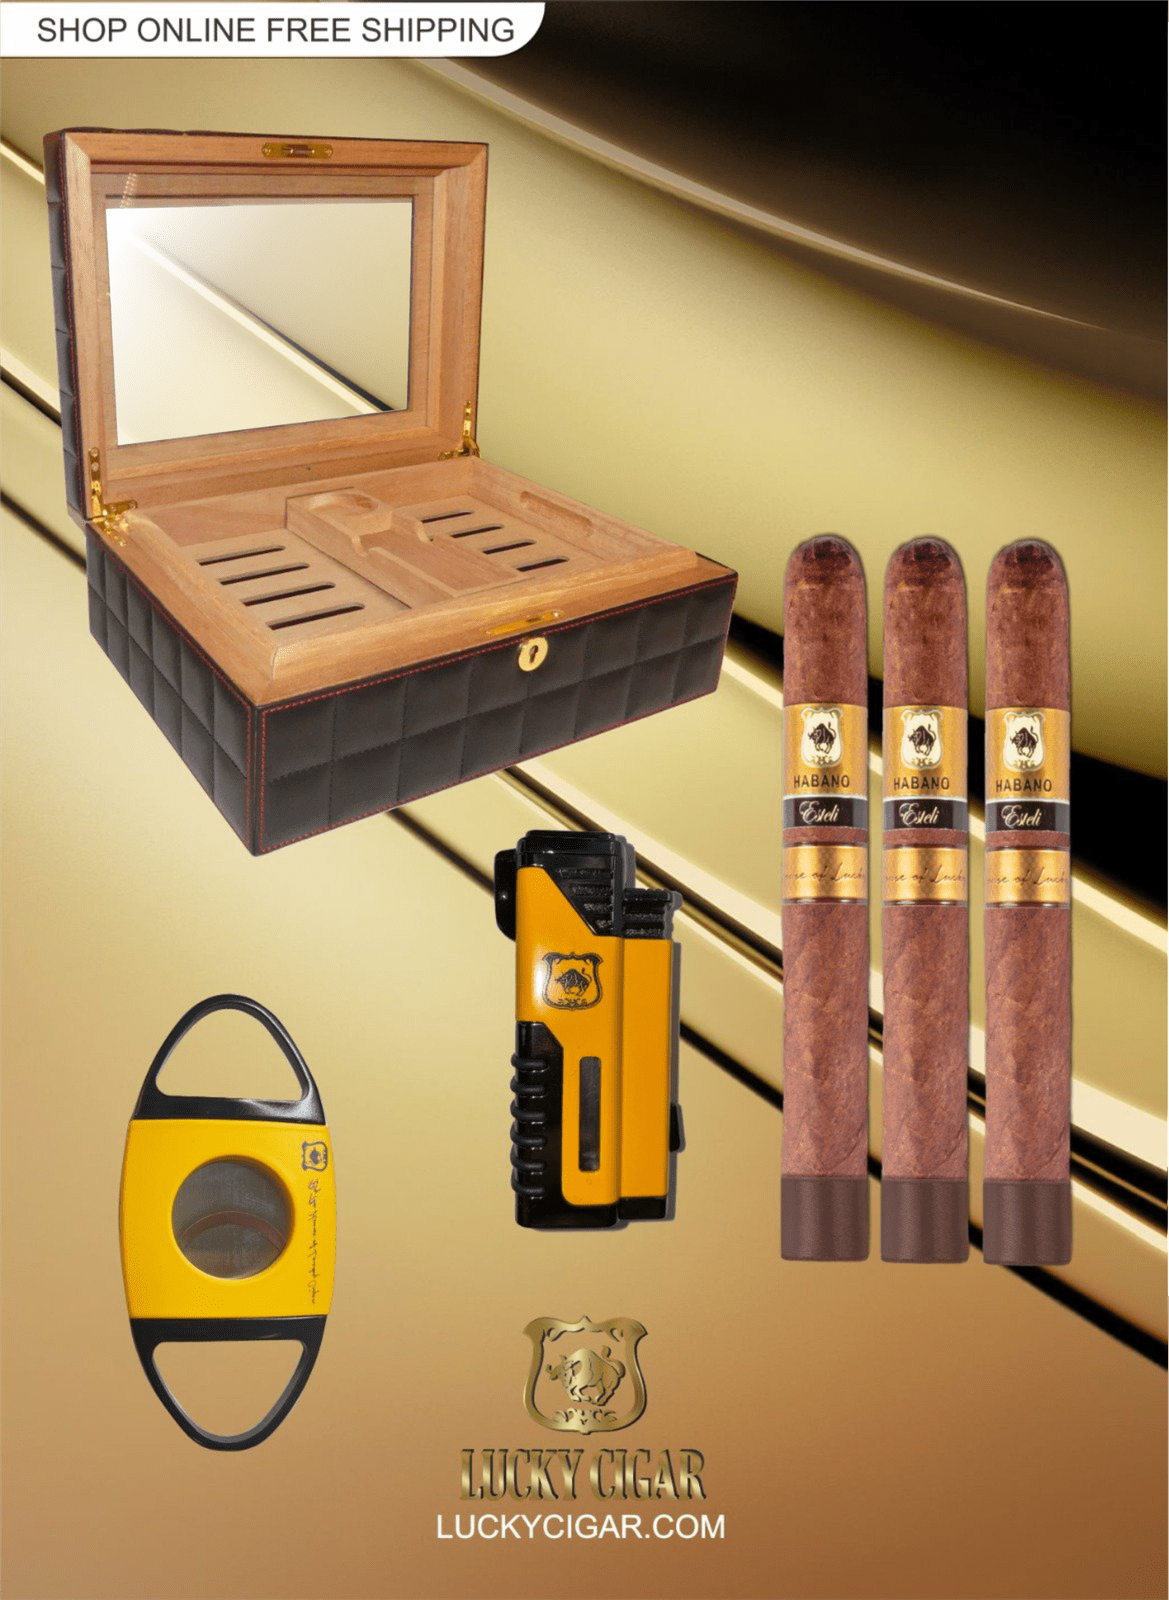 Cigar Gift Sets: 3 Habano Esteli Toro Cigars, Desk Humidor, Cutter, Torch